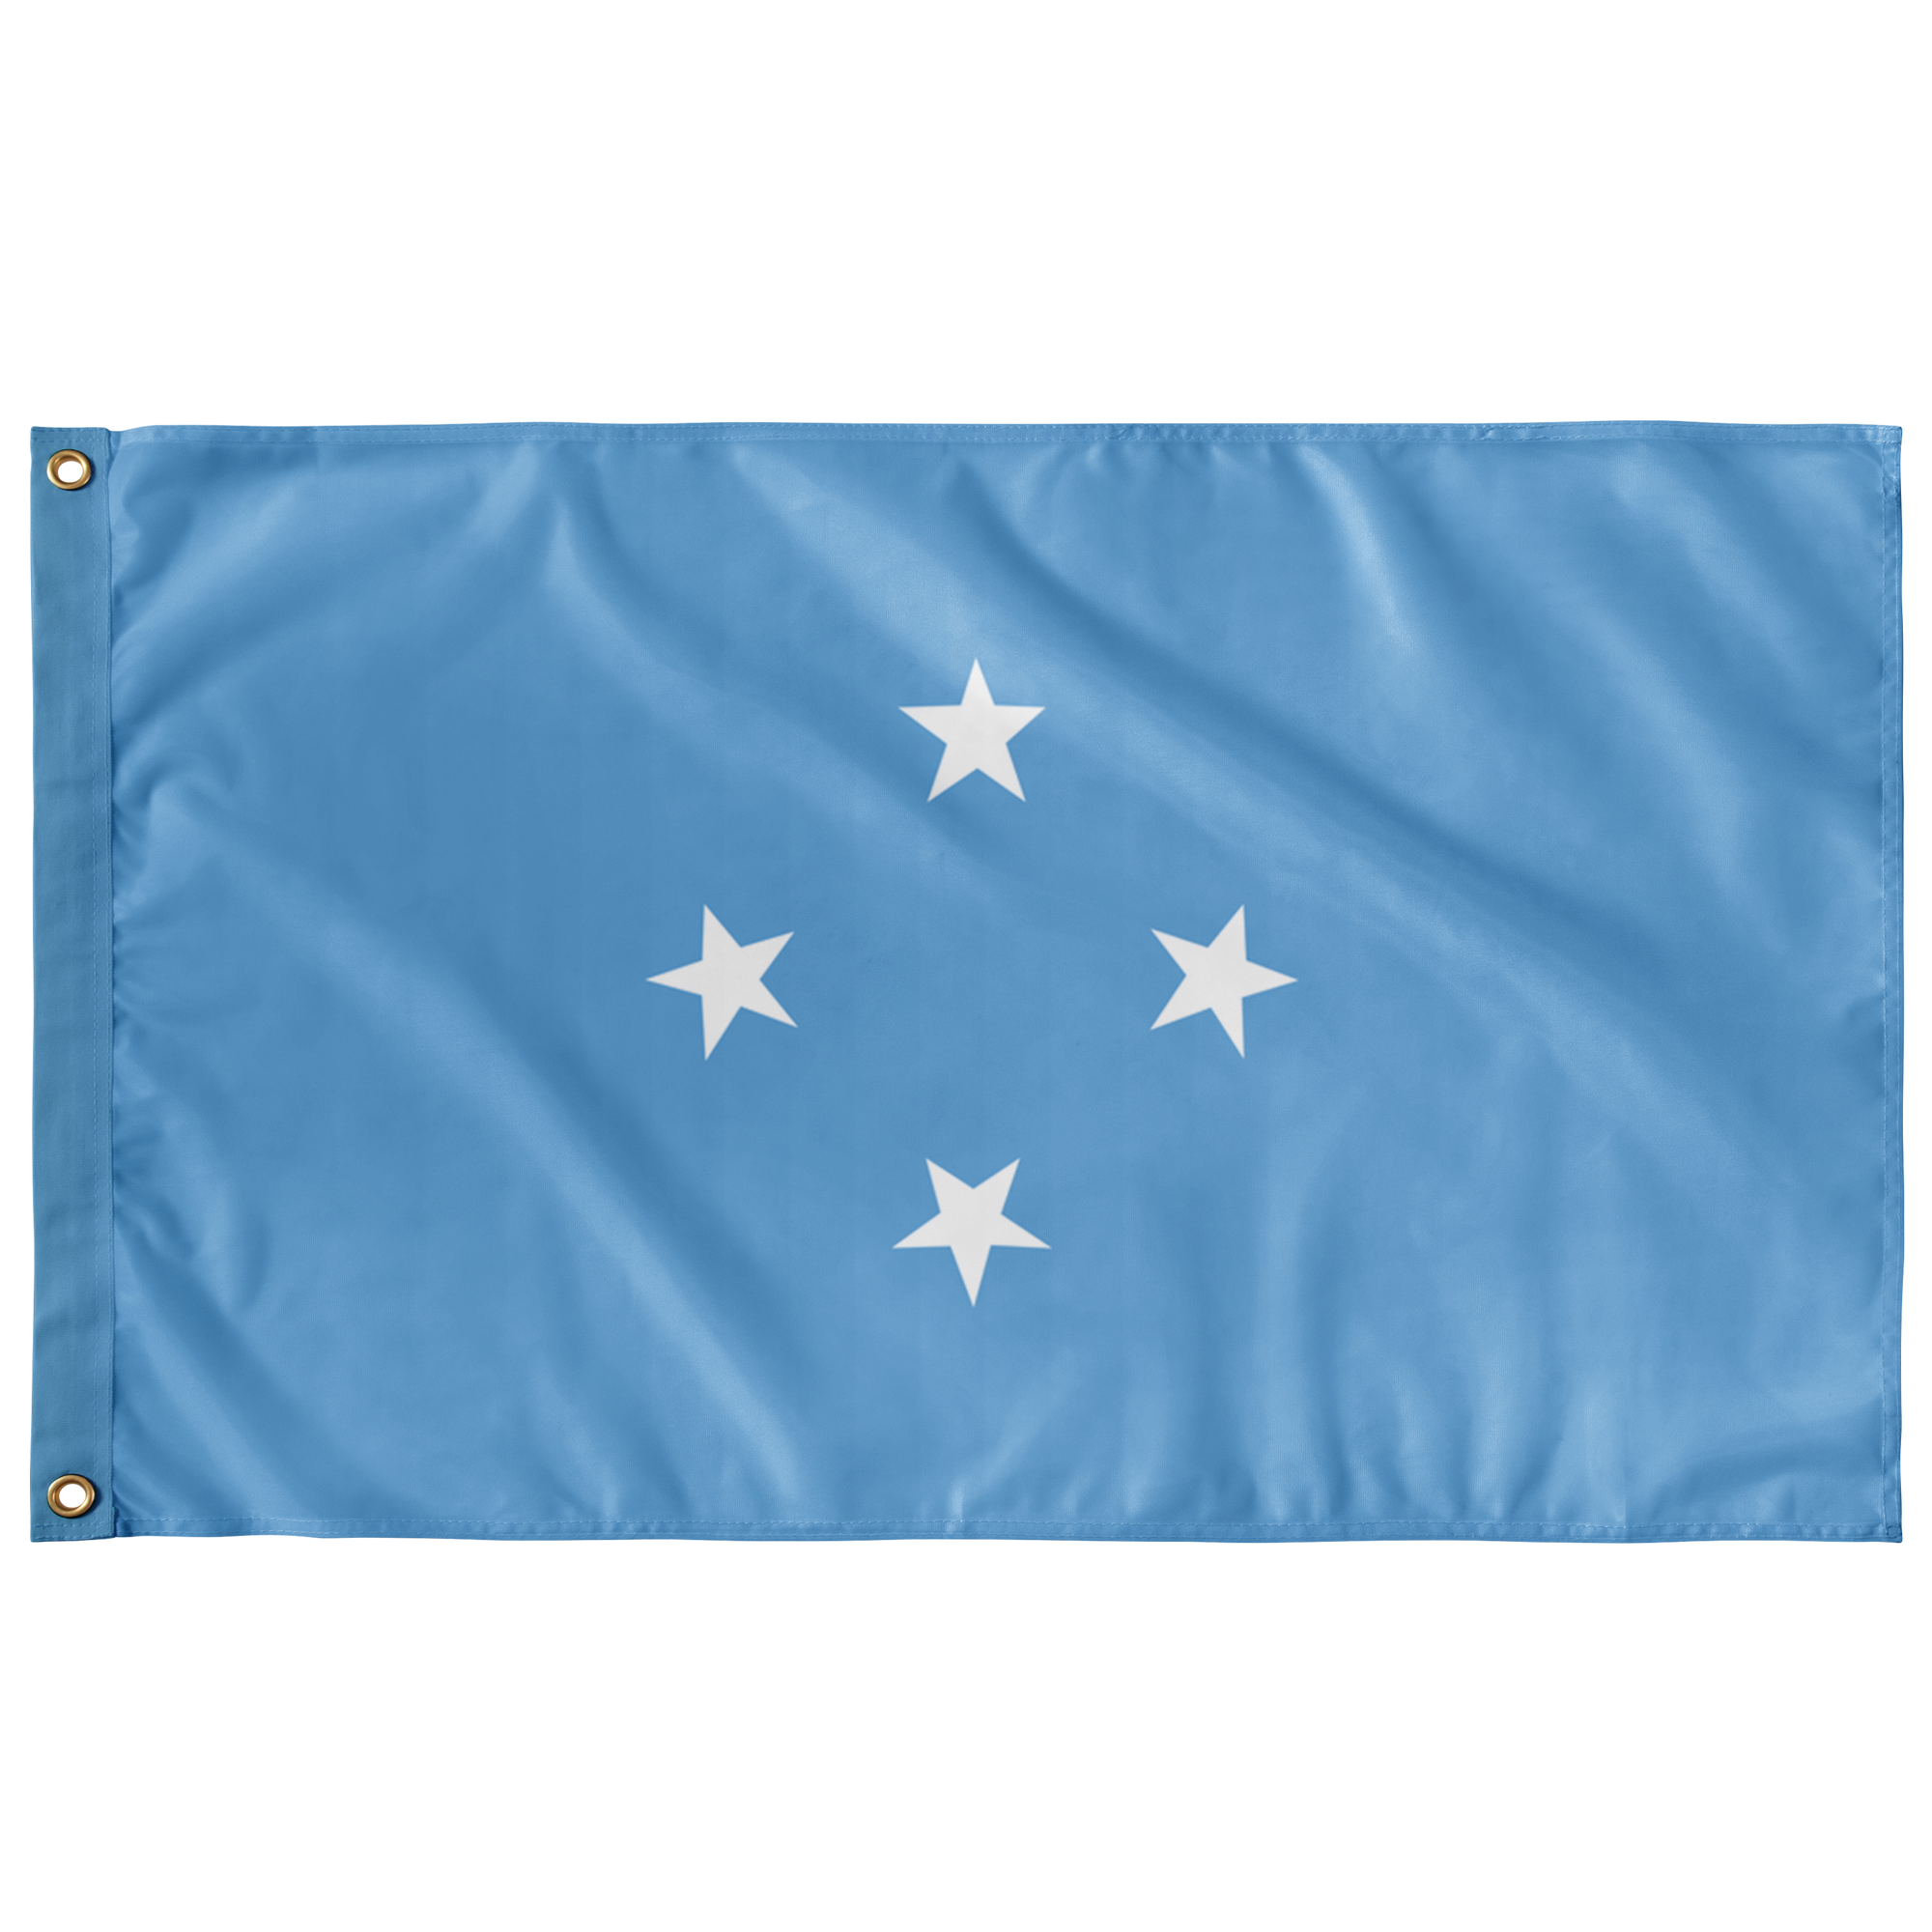 Micronesia Flag PNG HD